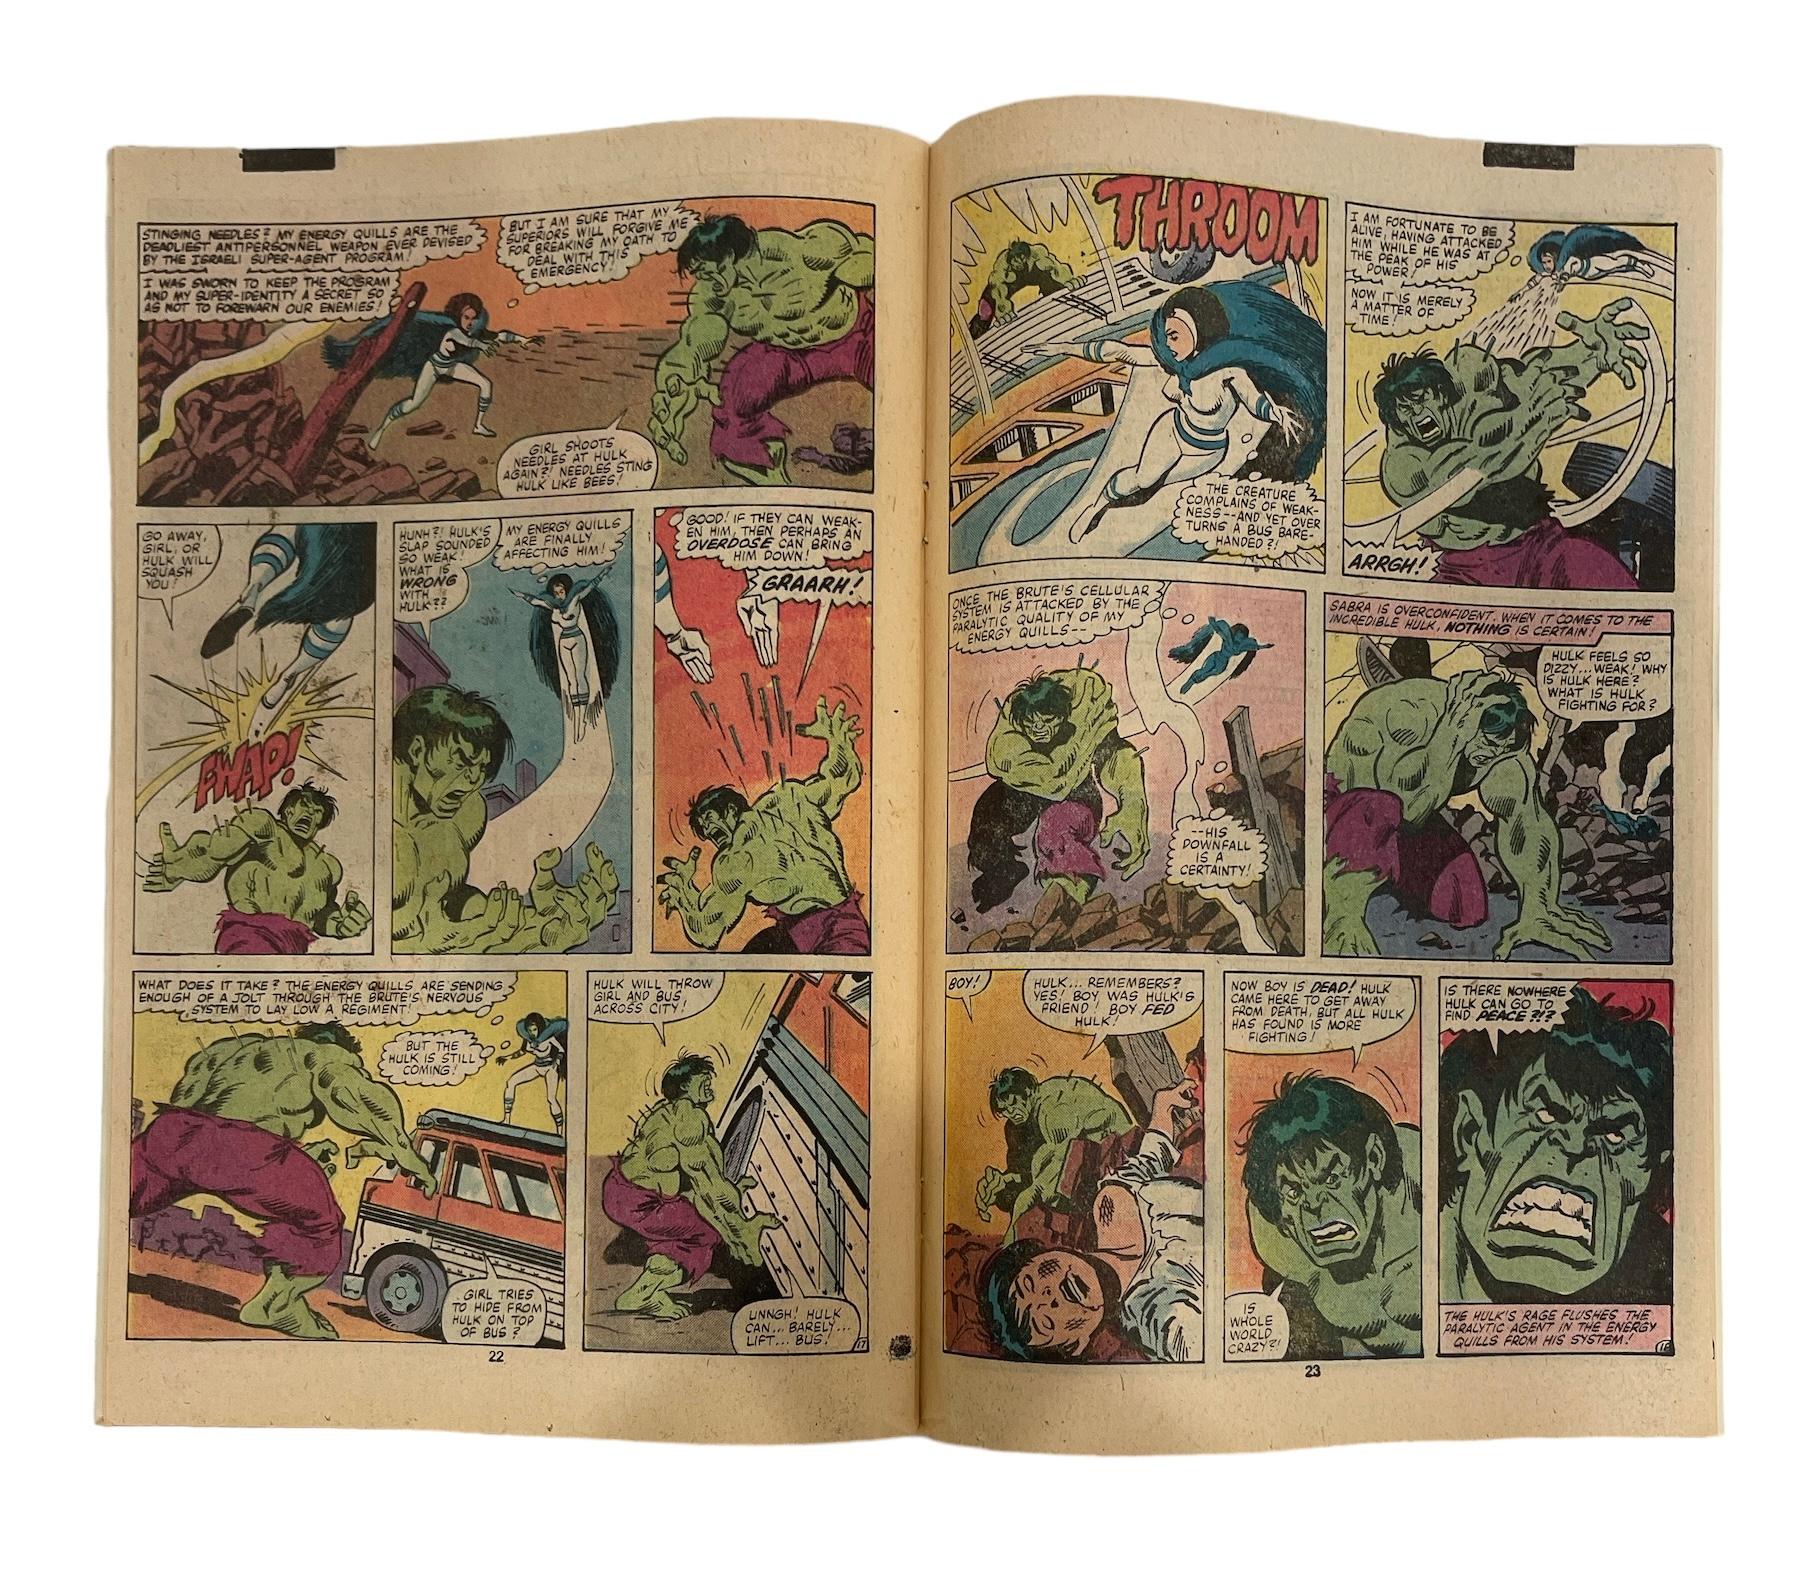 Vintage Marvel Comics - The Incredible Hulk Series No.256 and No.234